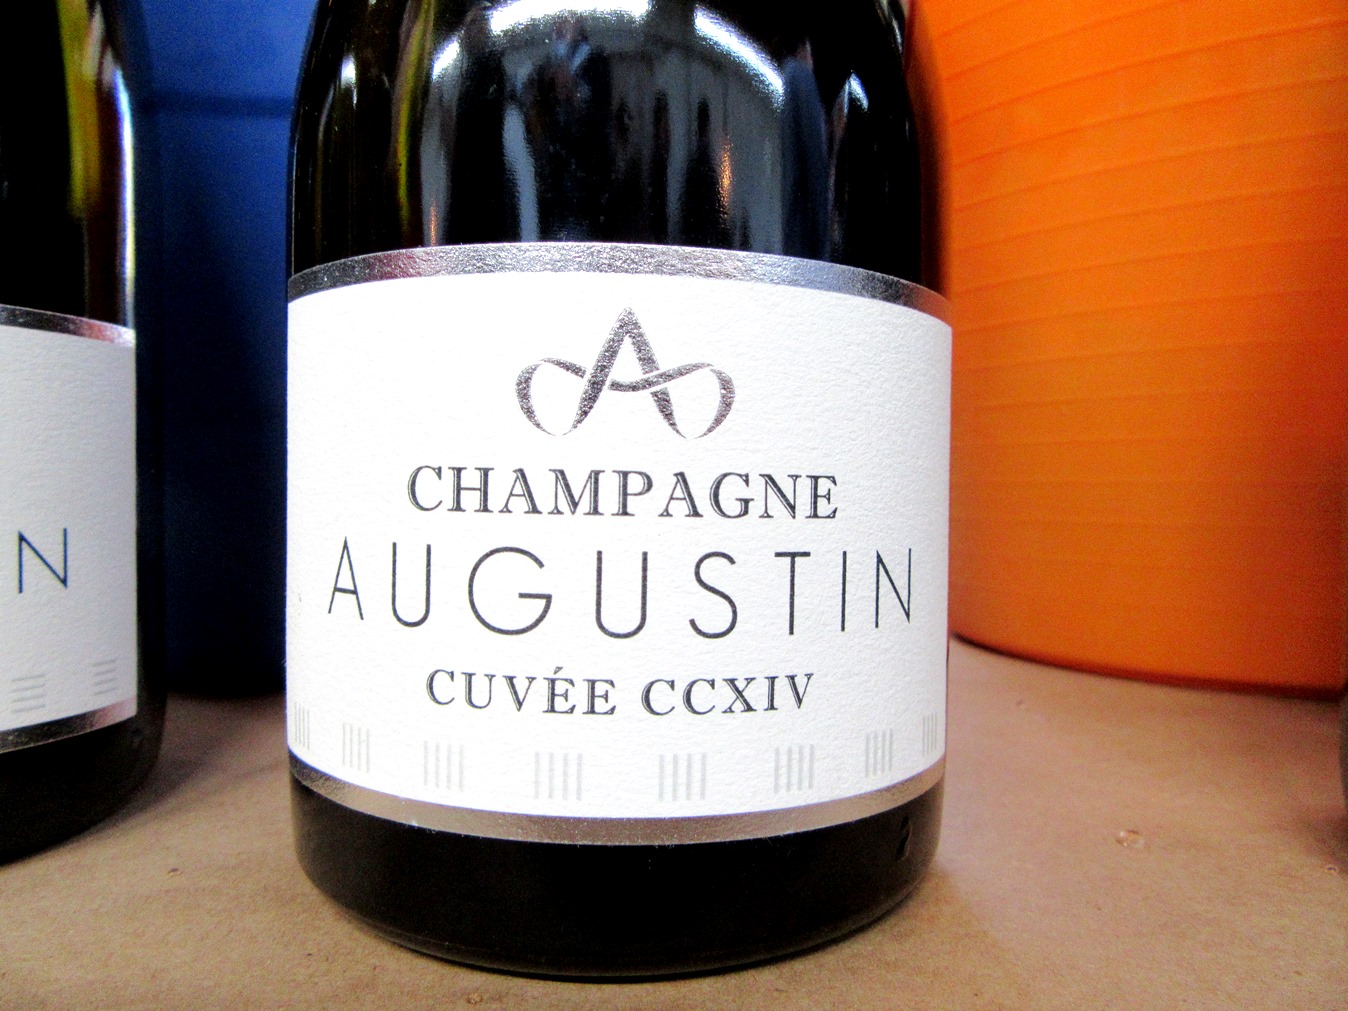 Augustin, Cuvée CCXIV L’Air (Air) Premier Cru Extra Brut, Champagne, France, Wine Casual